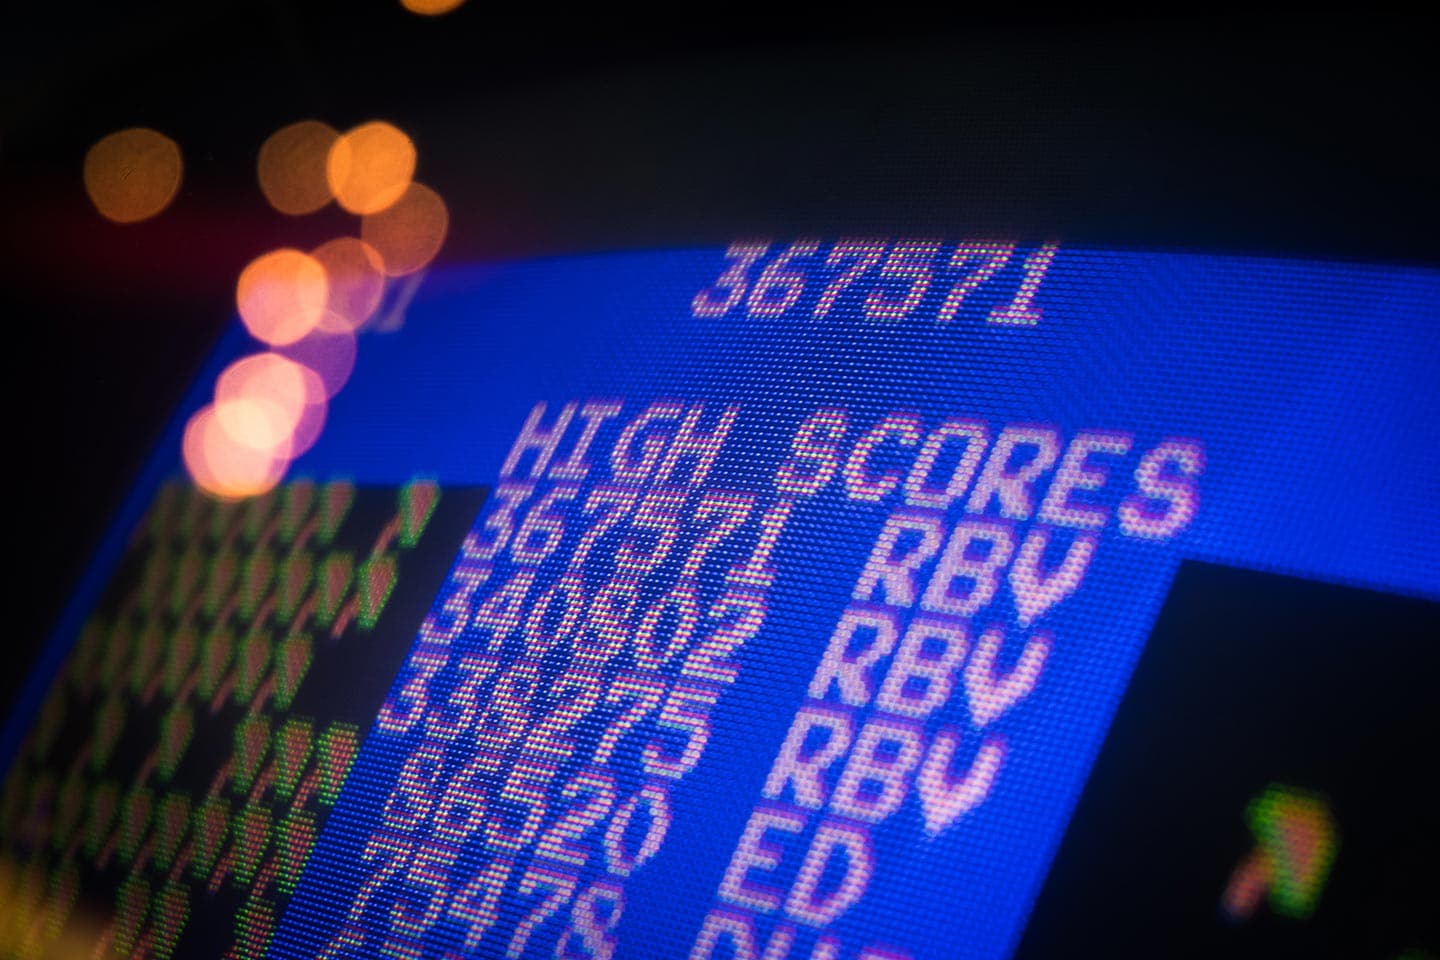 High scores on an arcade game